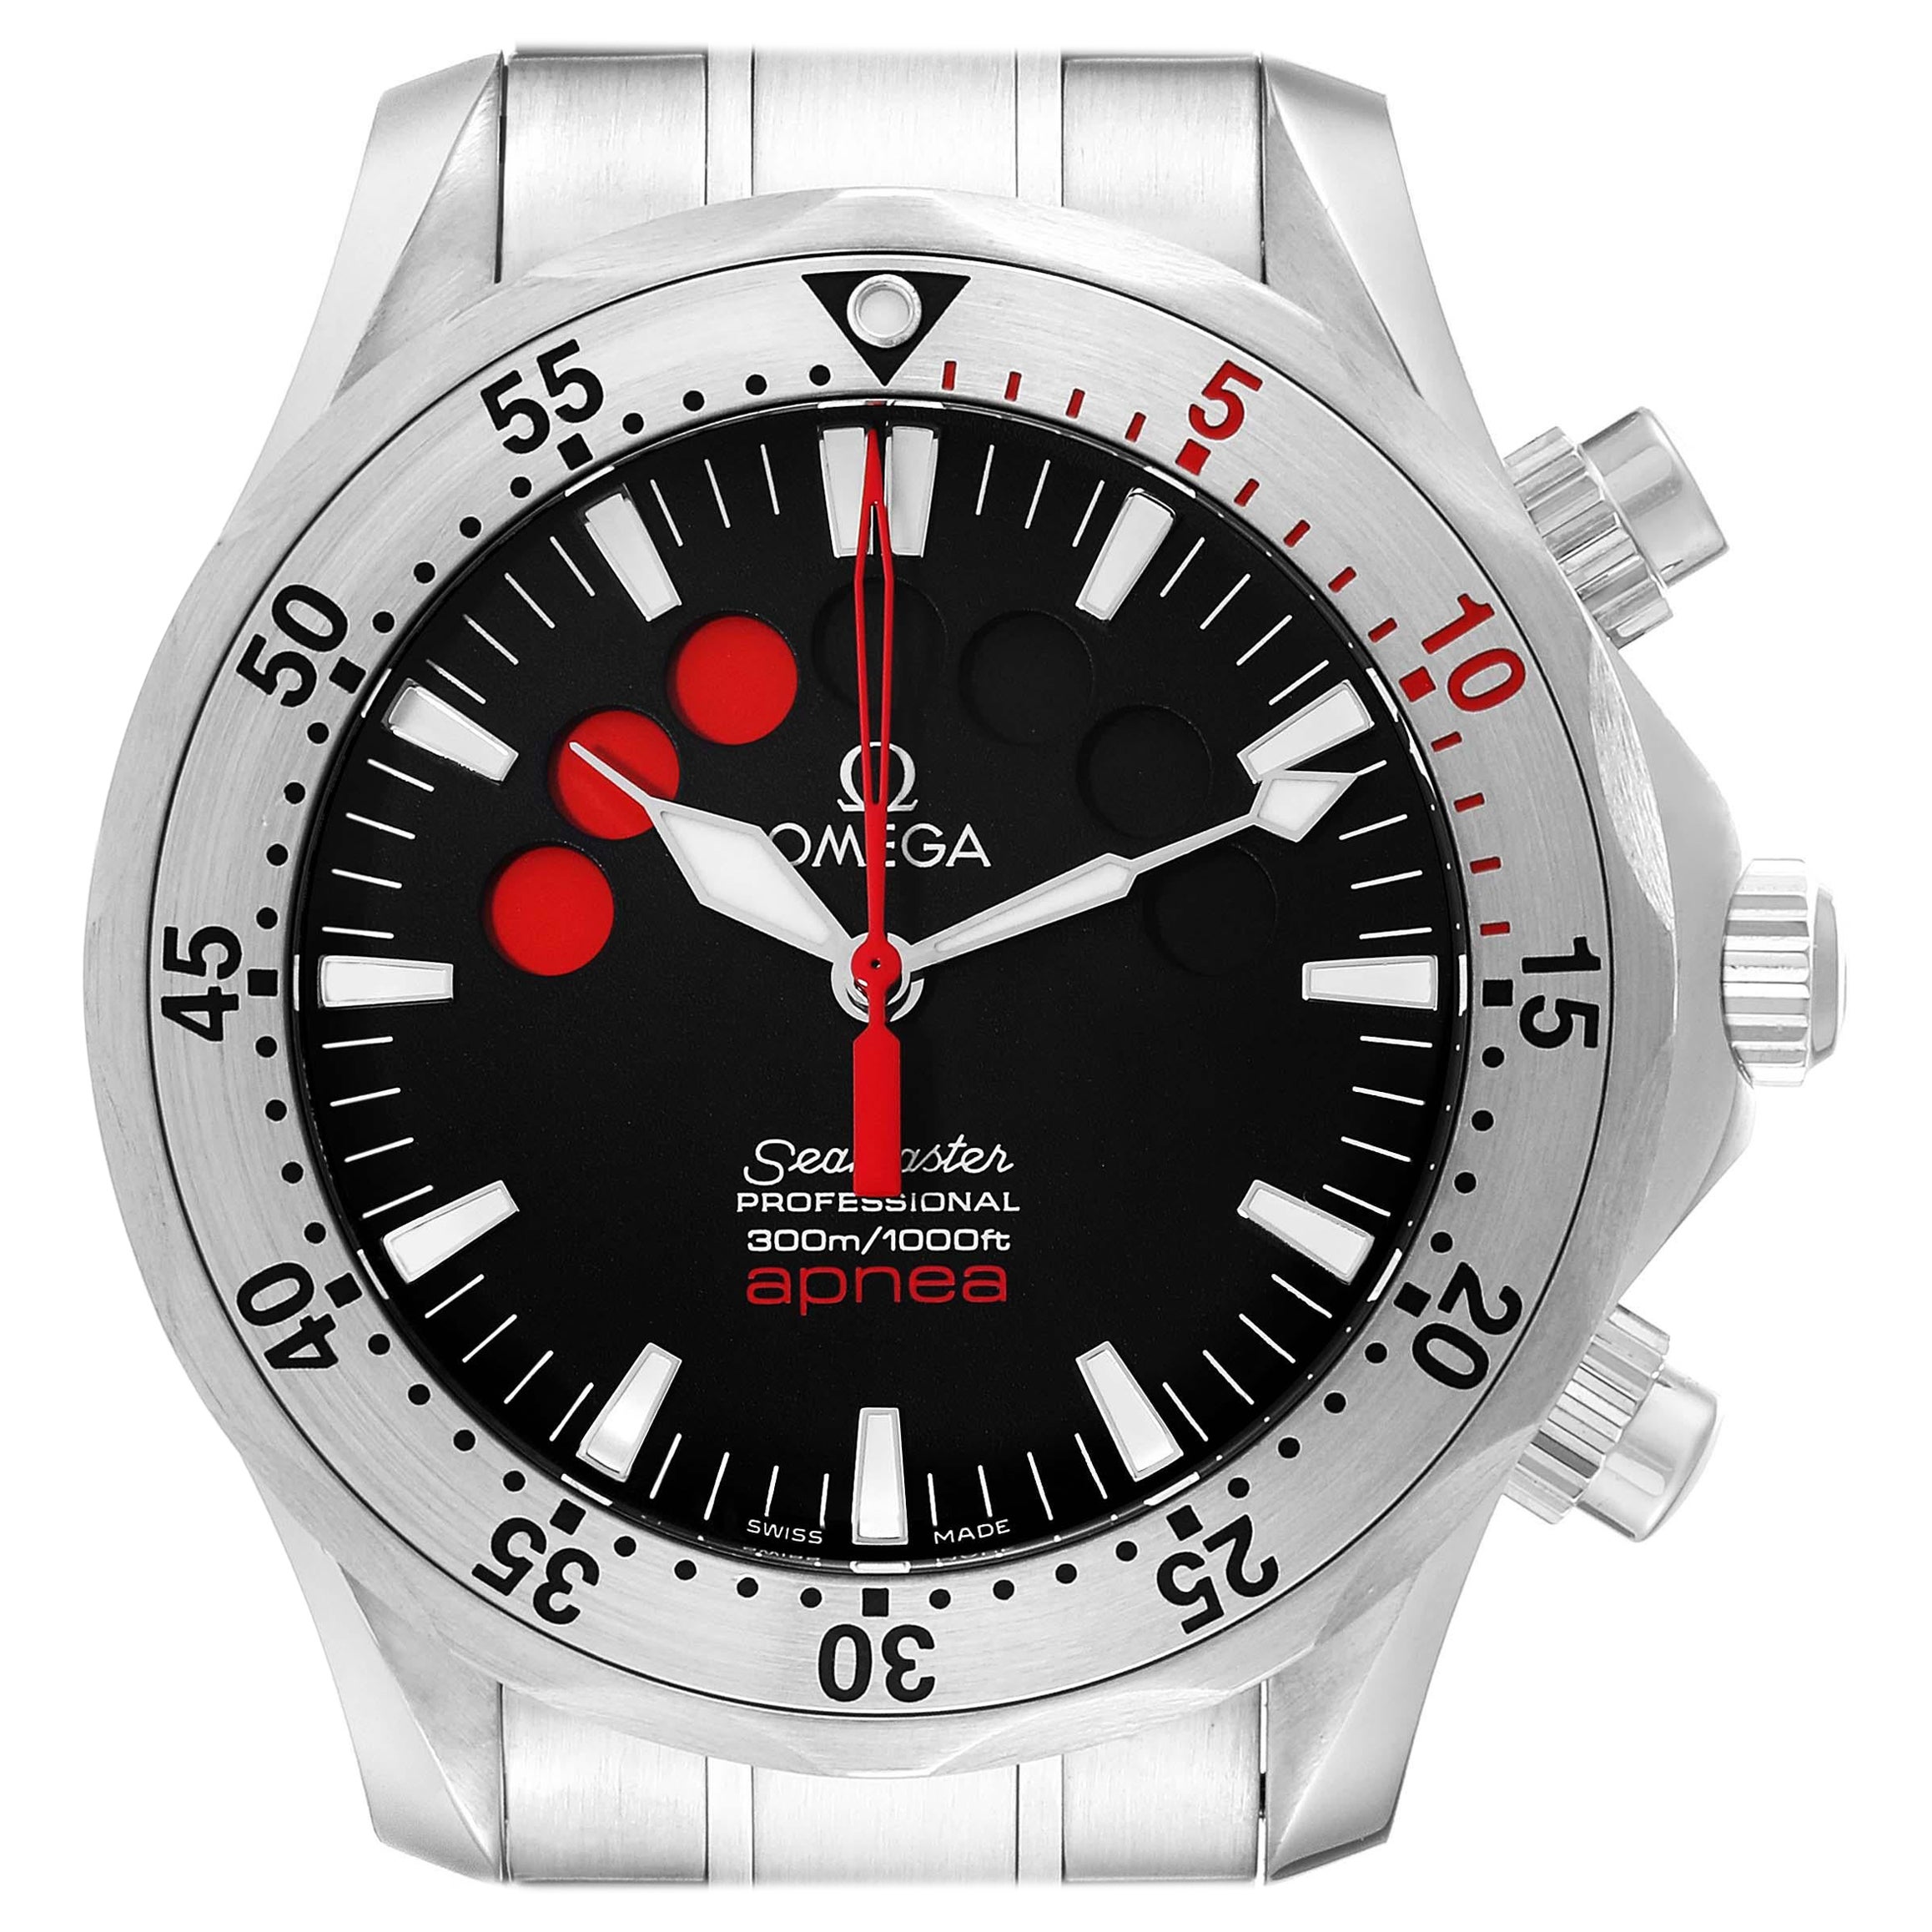 Omega Seamaster Apnea Jacques Mayol Black Dial Steel Mens Watch 2595.50.00